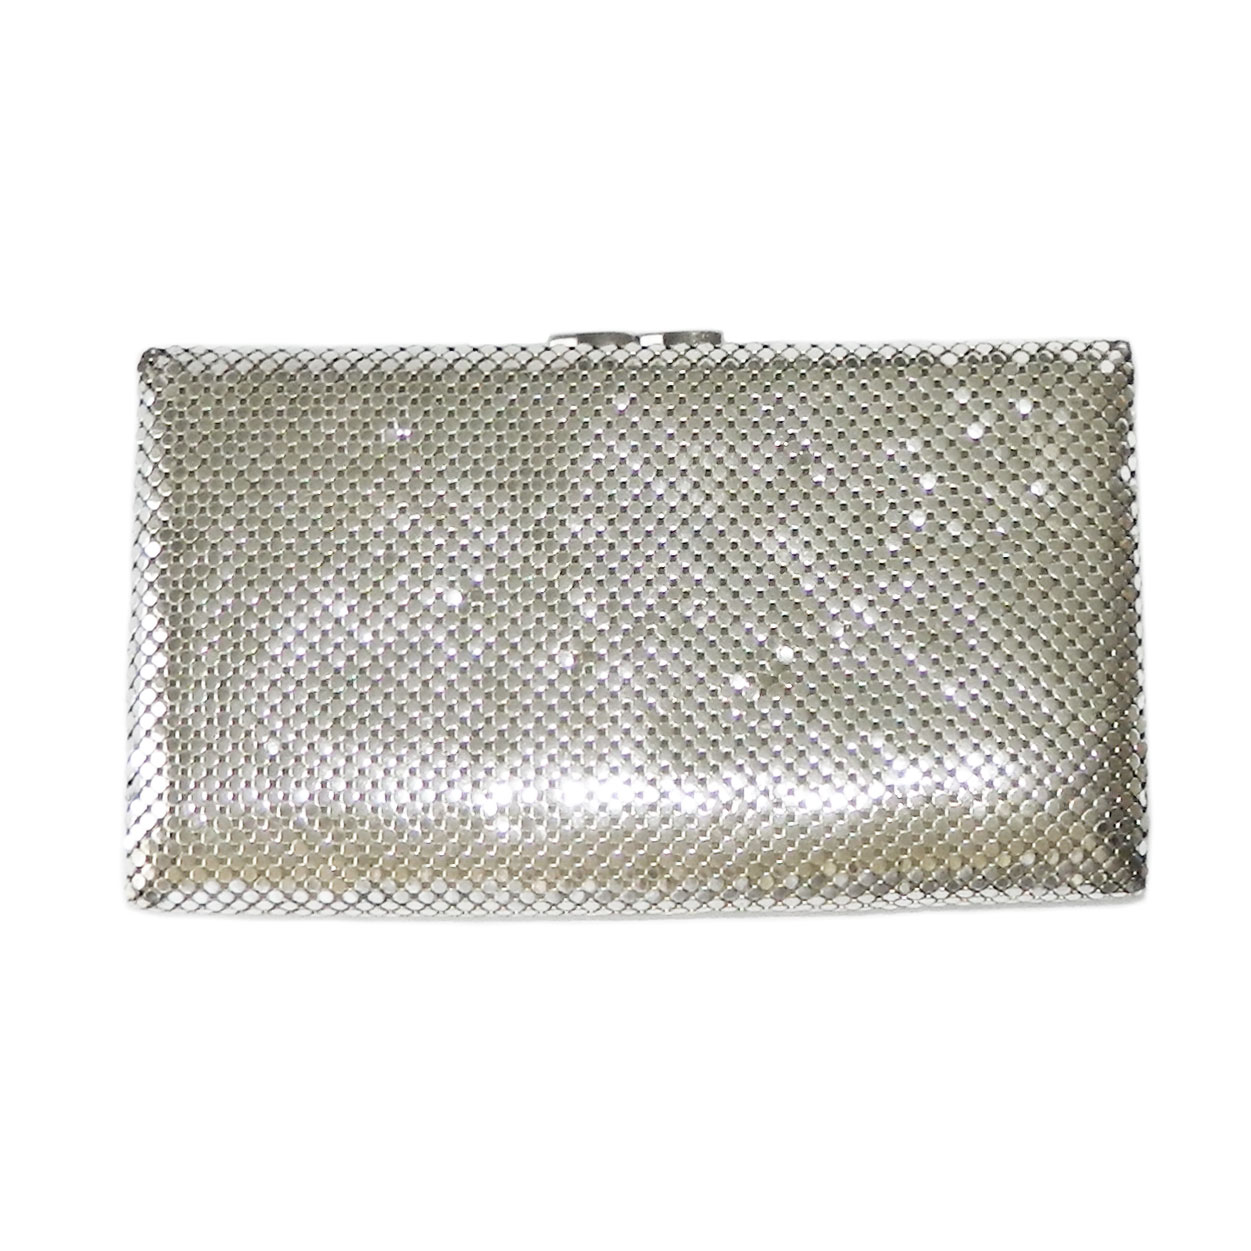 Vintage silver mesh clutch purse